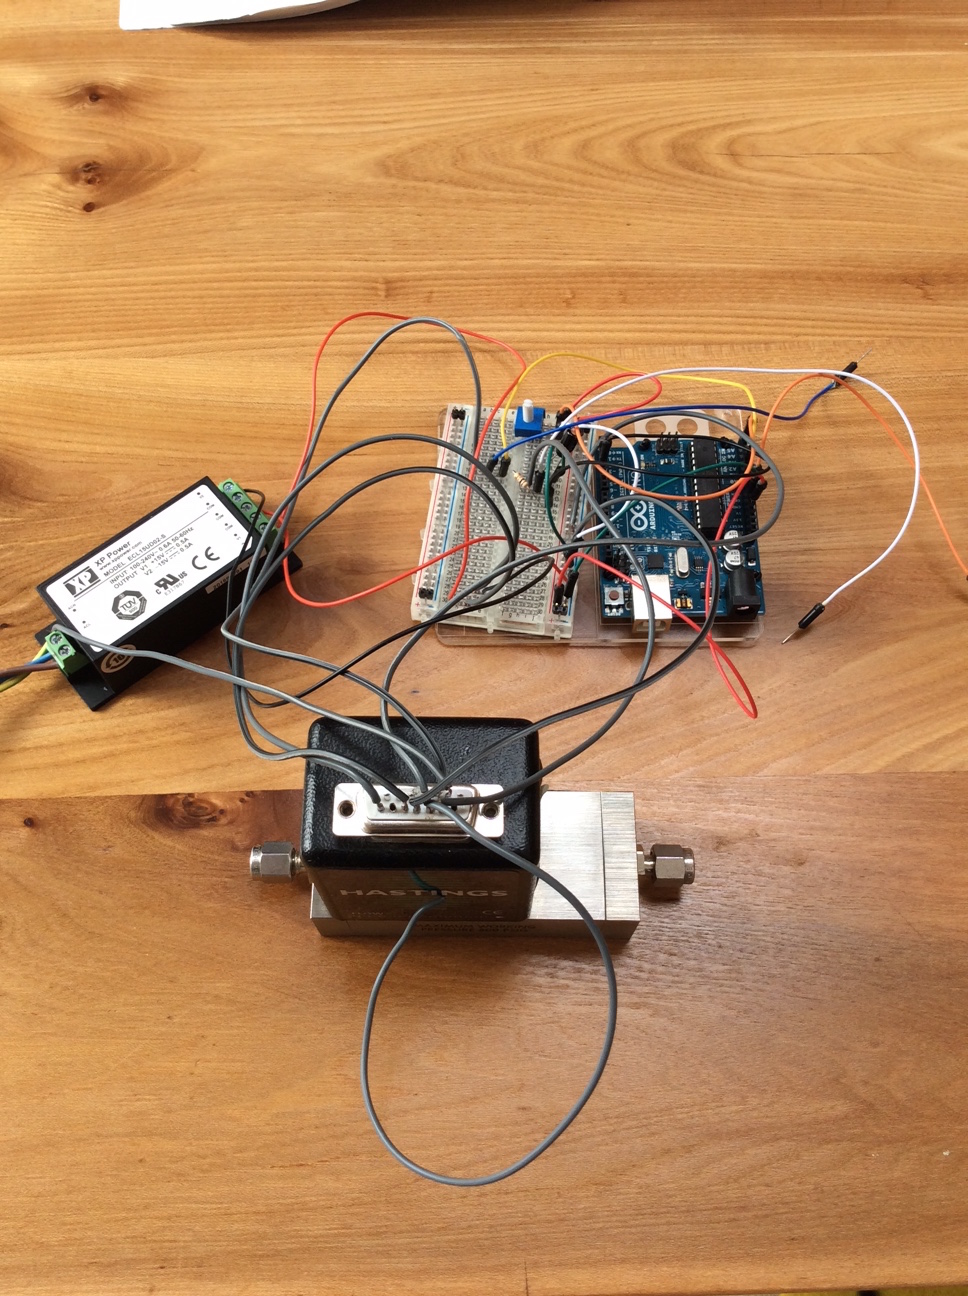 MFC control setup with Arduino